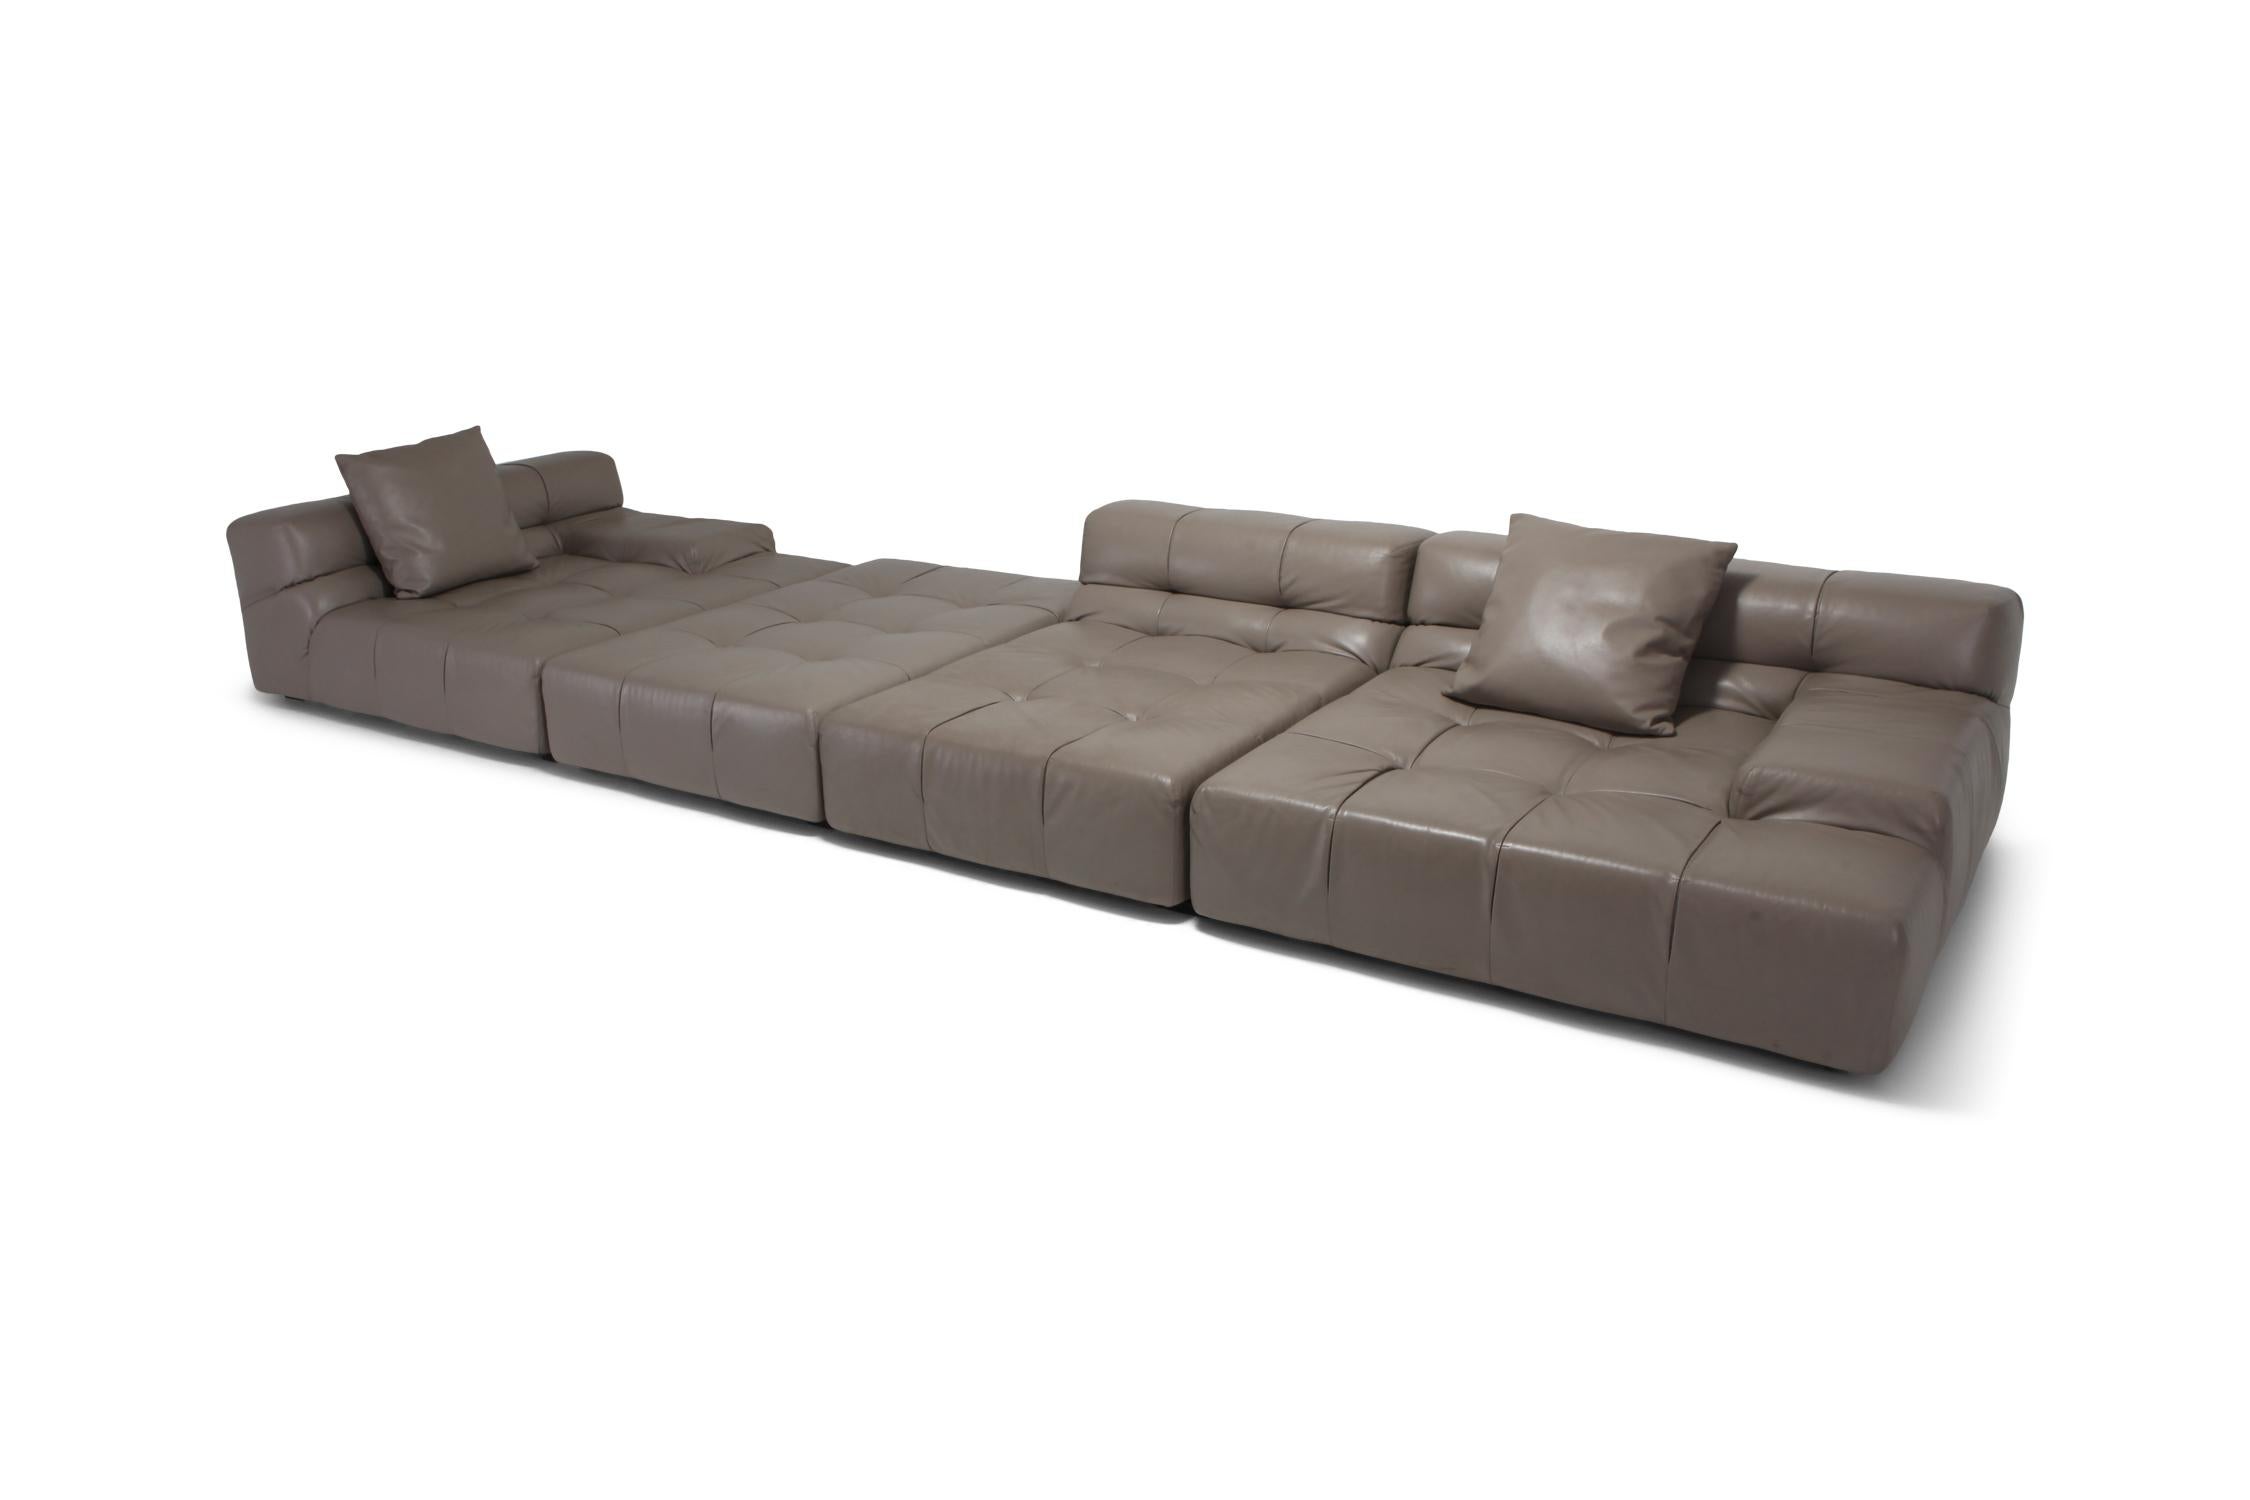 Contemporary modular sofa designed by Patricia Urquiola for B&B Italia in taupe colored leather.

Collections: B&B Italia - B&B Italia Project - Maxalto
Category: Gamma
Feature: Cowhide leather - Chrome tanning - Aniline dye - Corrected grain -